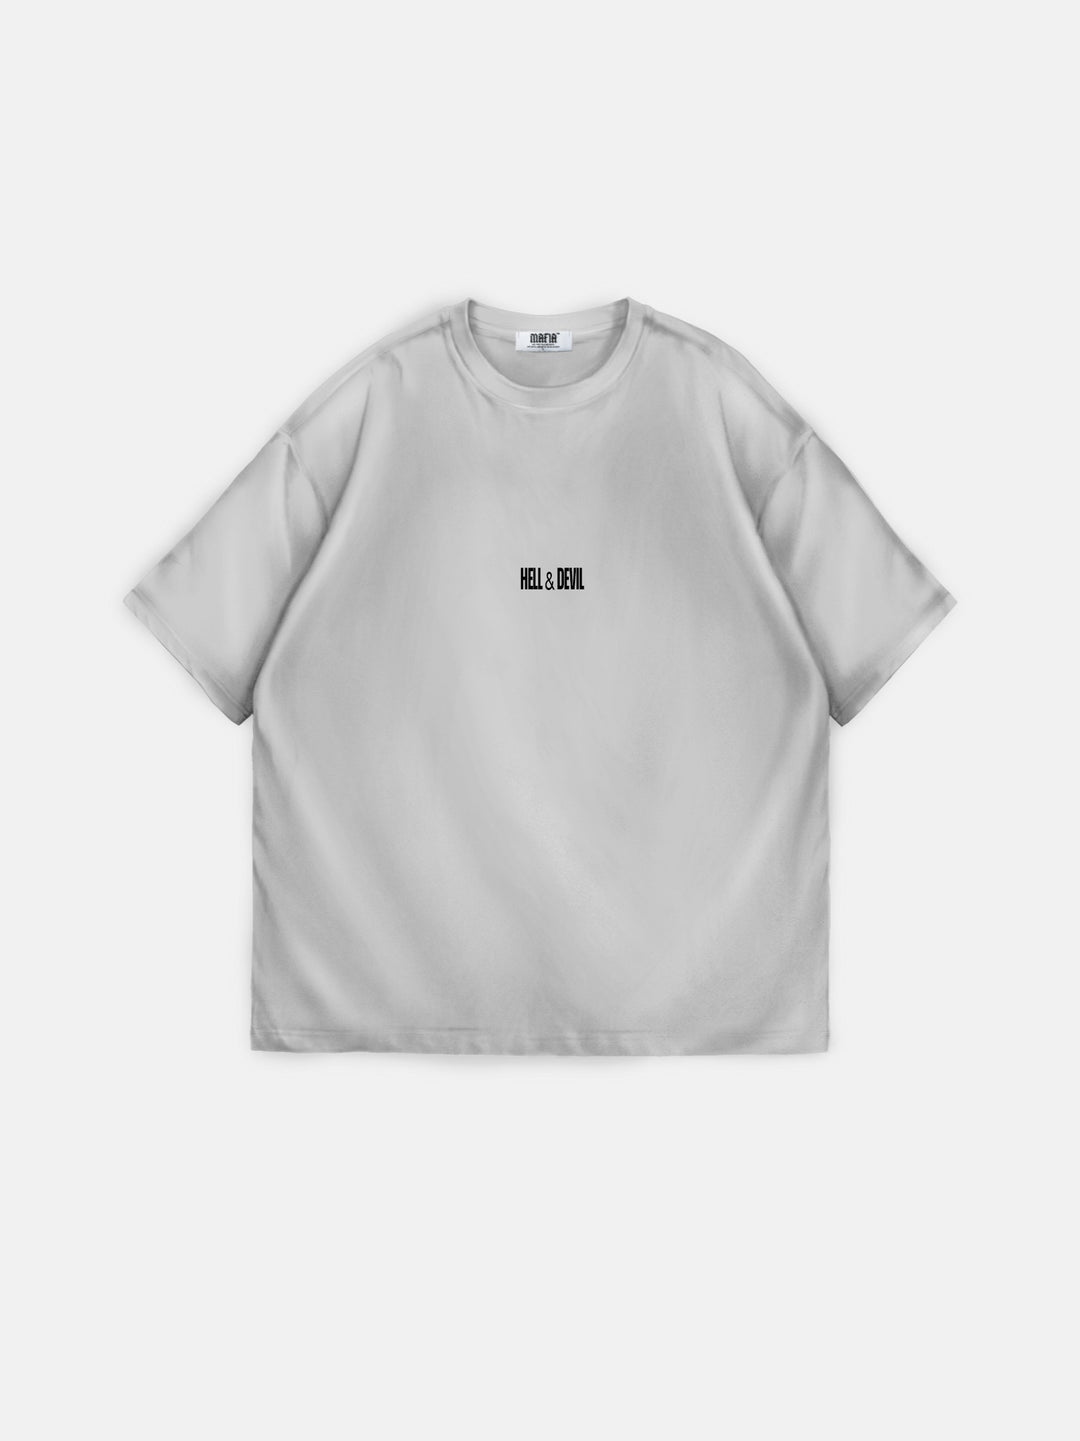 Oversize Statement T-shirt - Grey